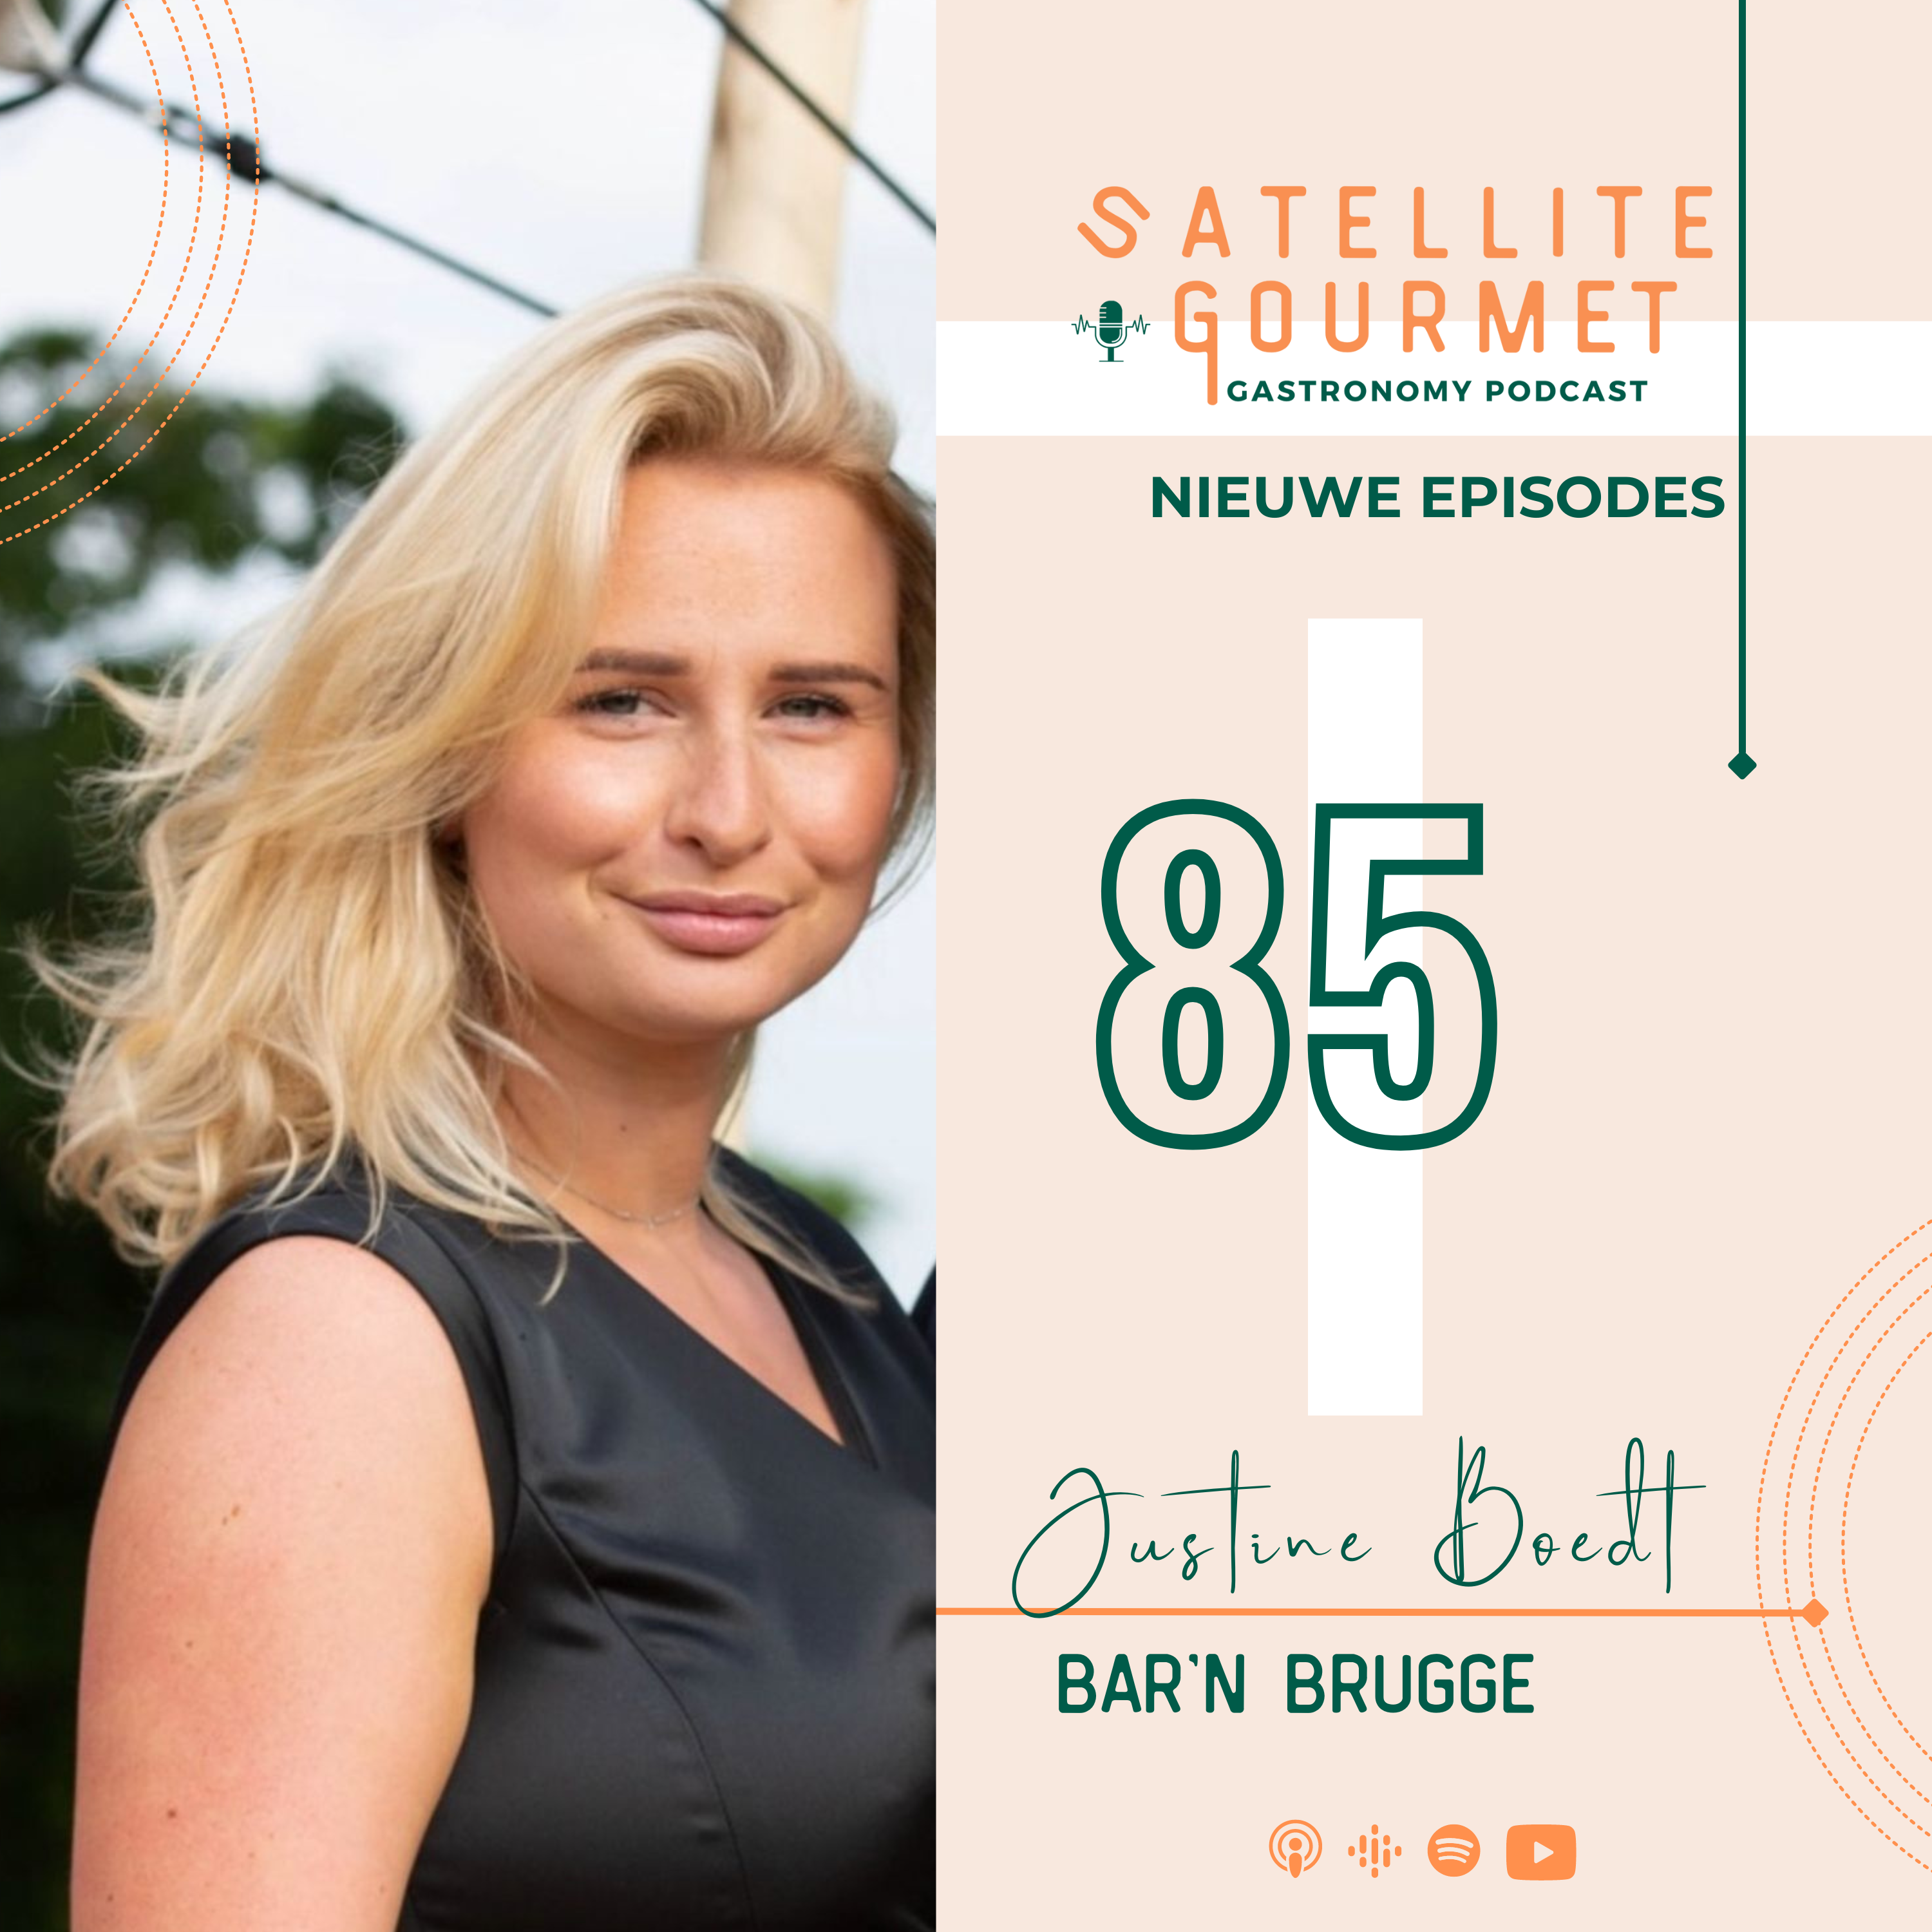 #85 Justine Boedt